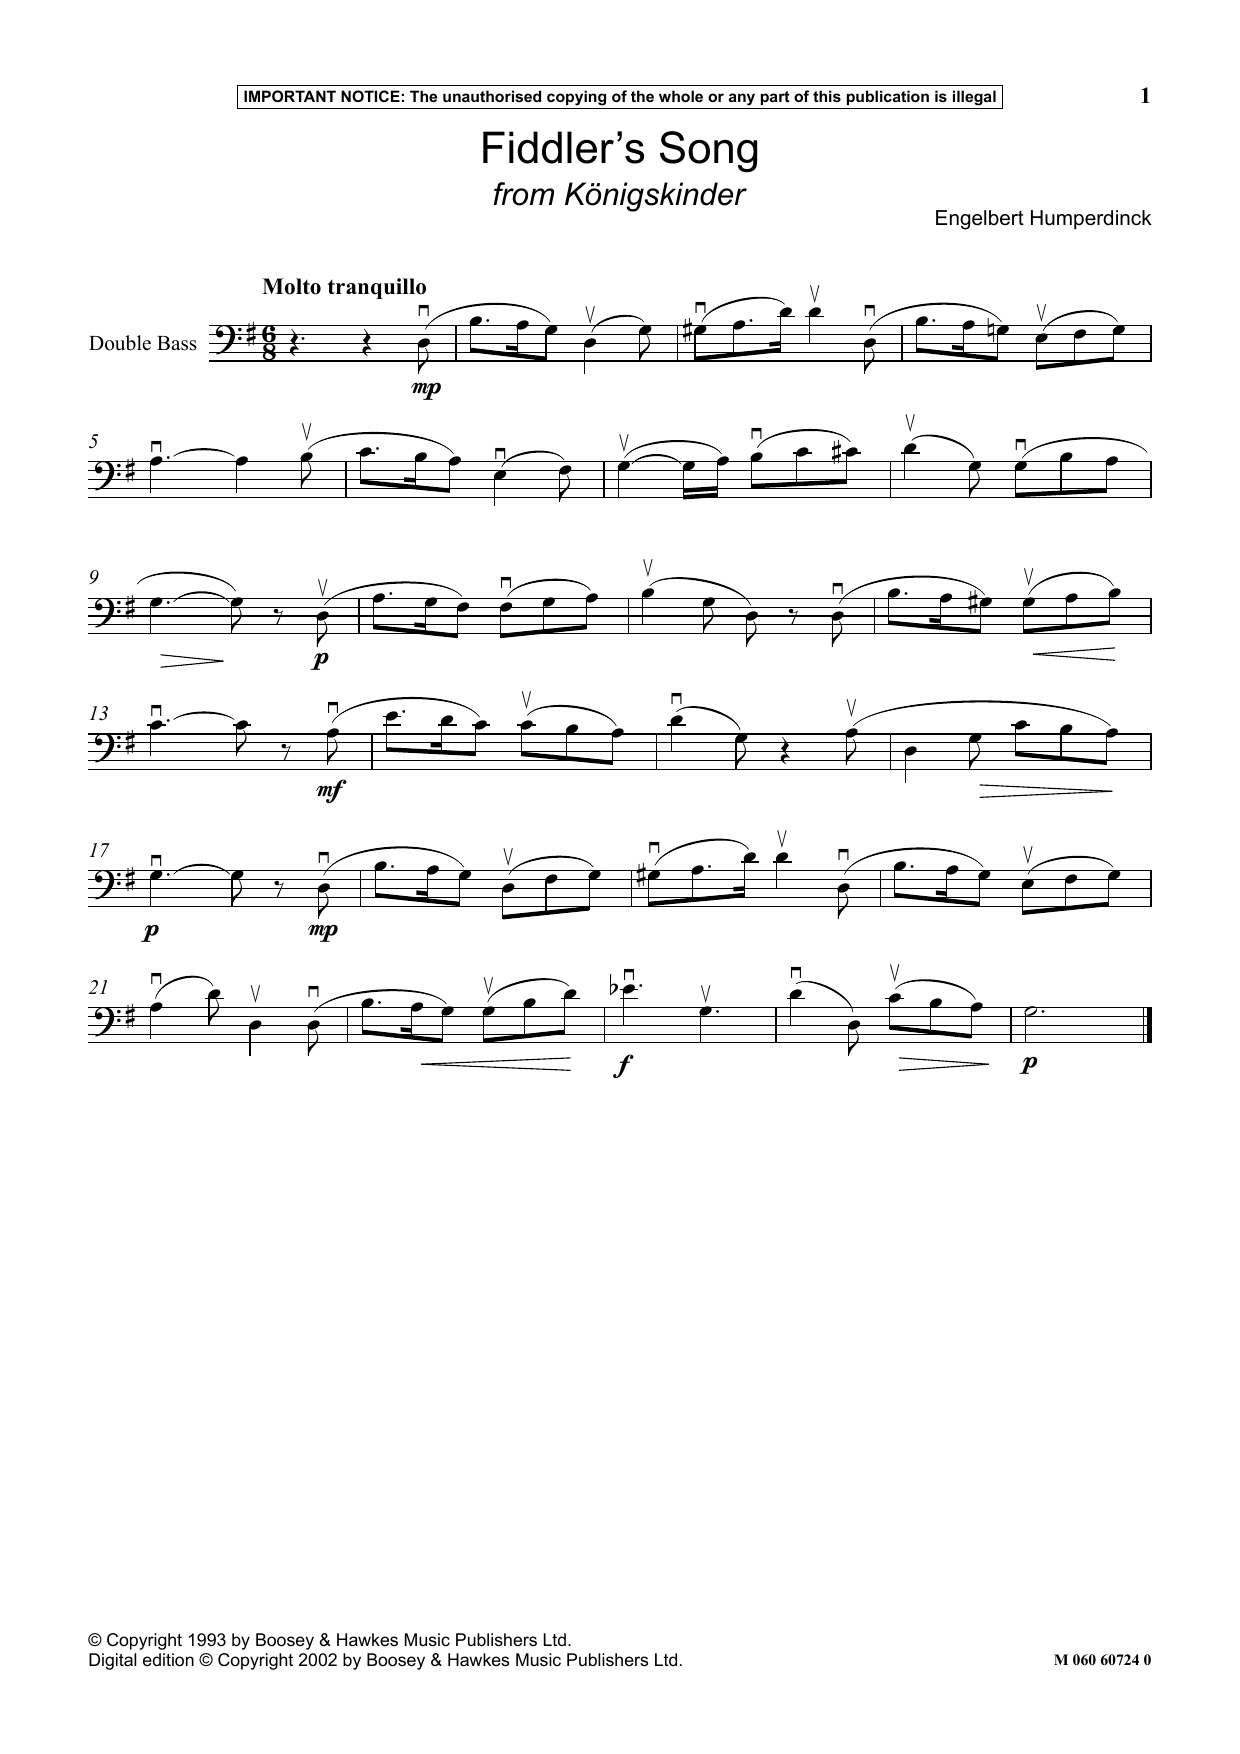 Download Engelbert Humperdinck Fiddler's Song (from Konigskinder) Sheet Music